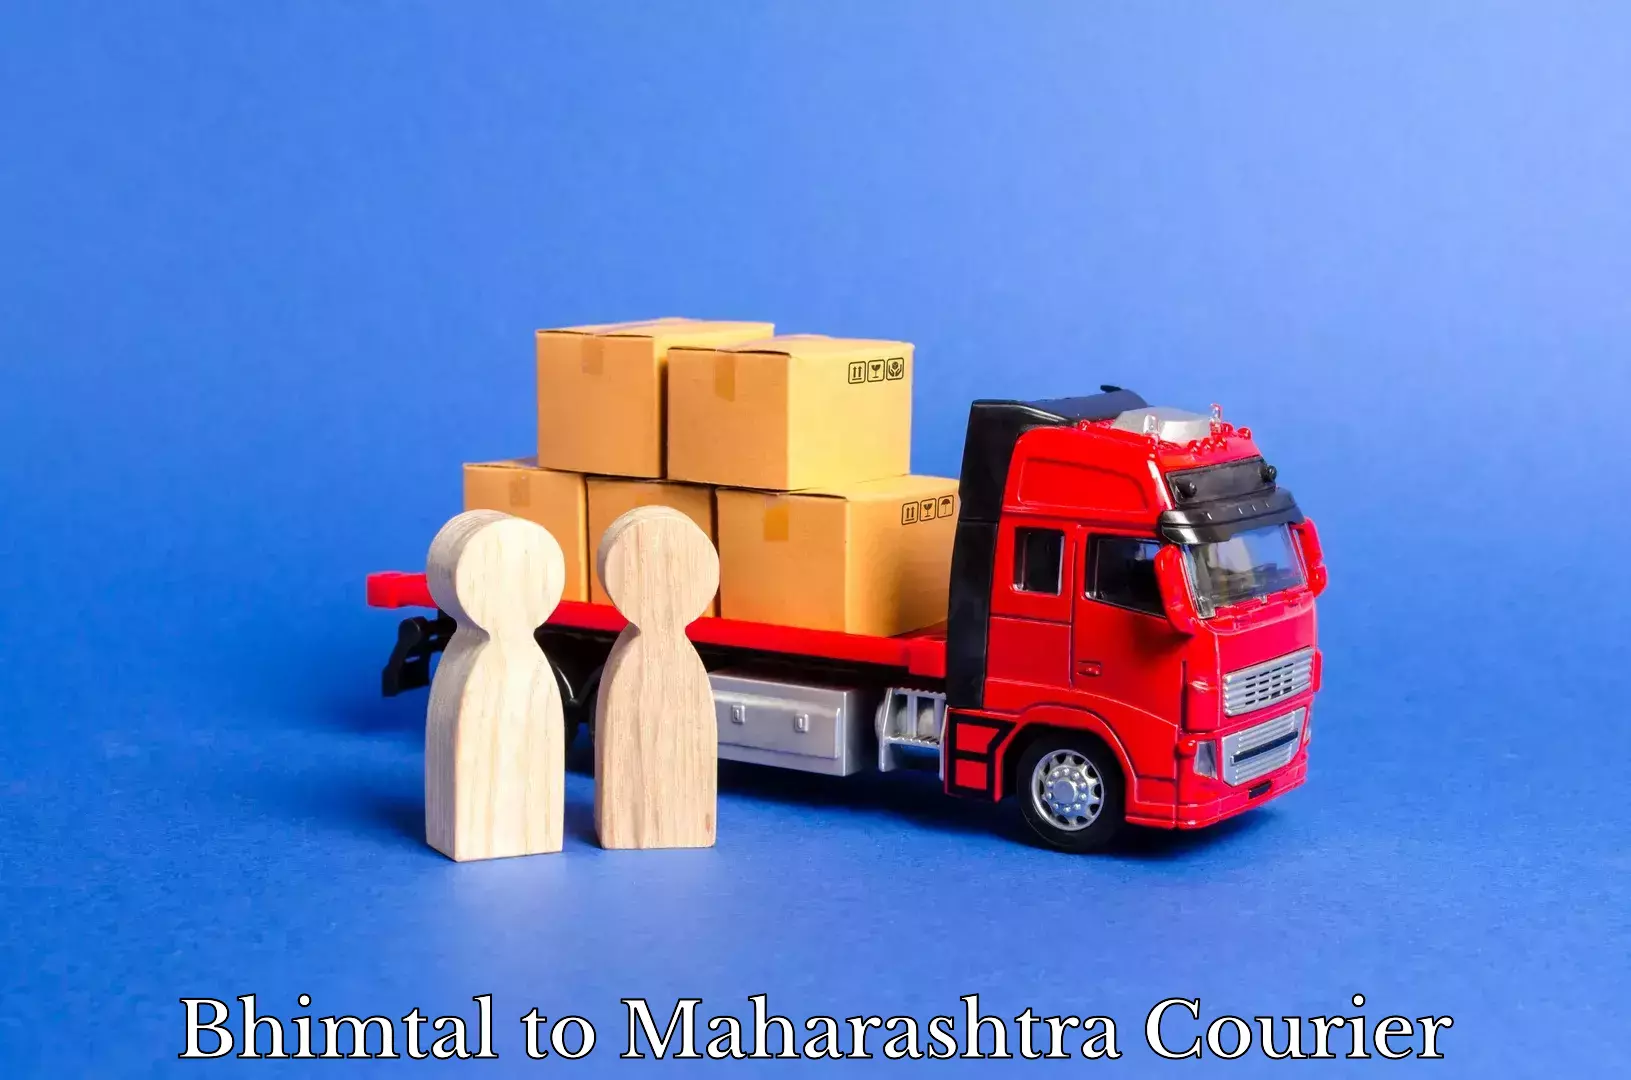 Courier service innovation Bhimtal to Maharashtra